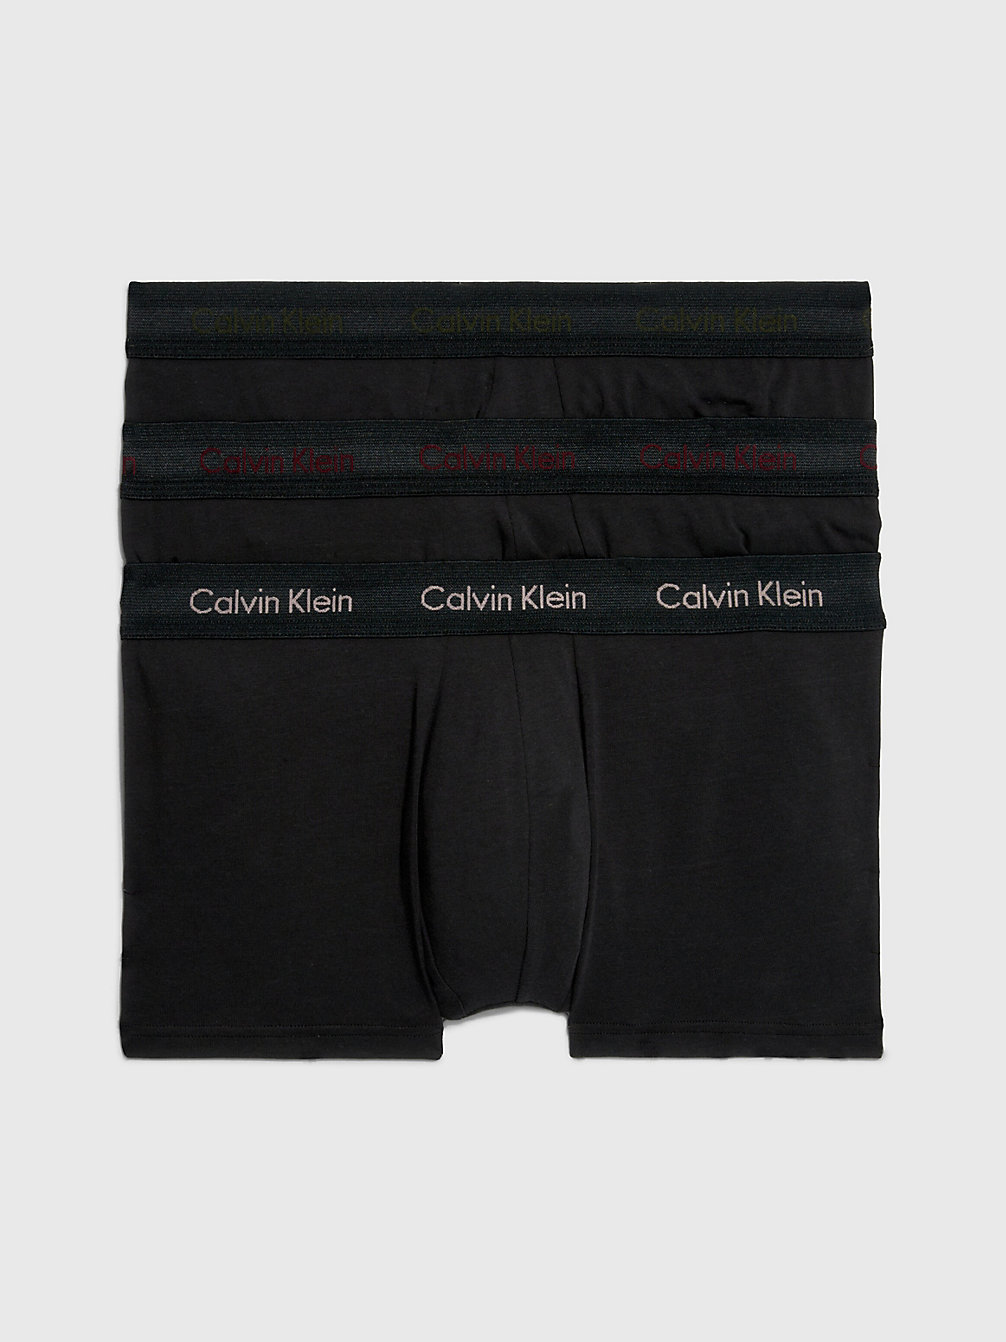 B-WOODROSE, FLD OLV, DEEP ROUGE LG 3-Pack Heupboxers - Cotton Stretch undefined heren Calvin Klein